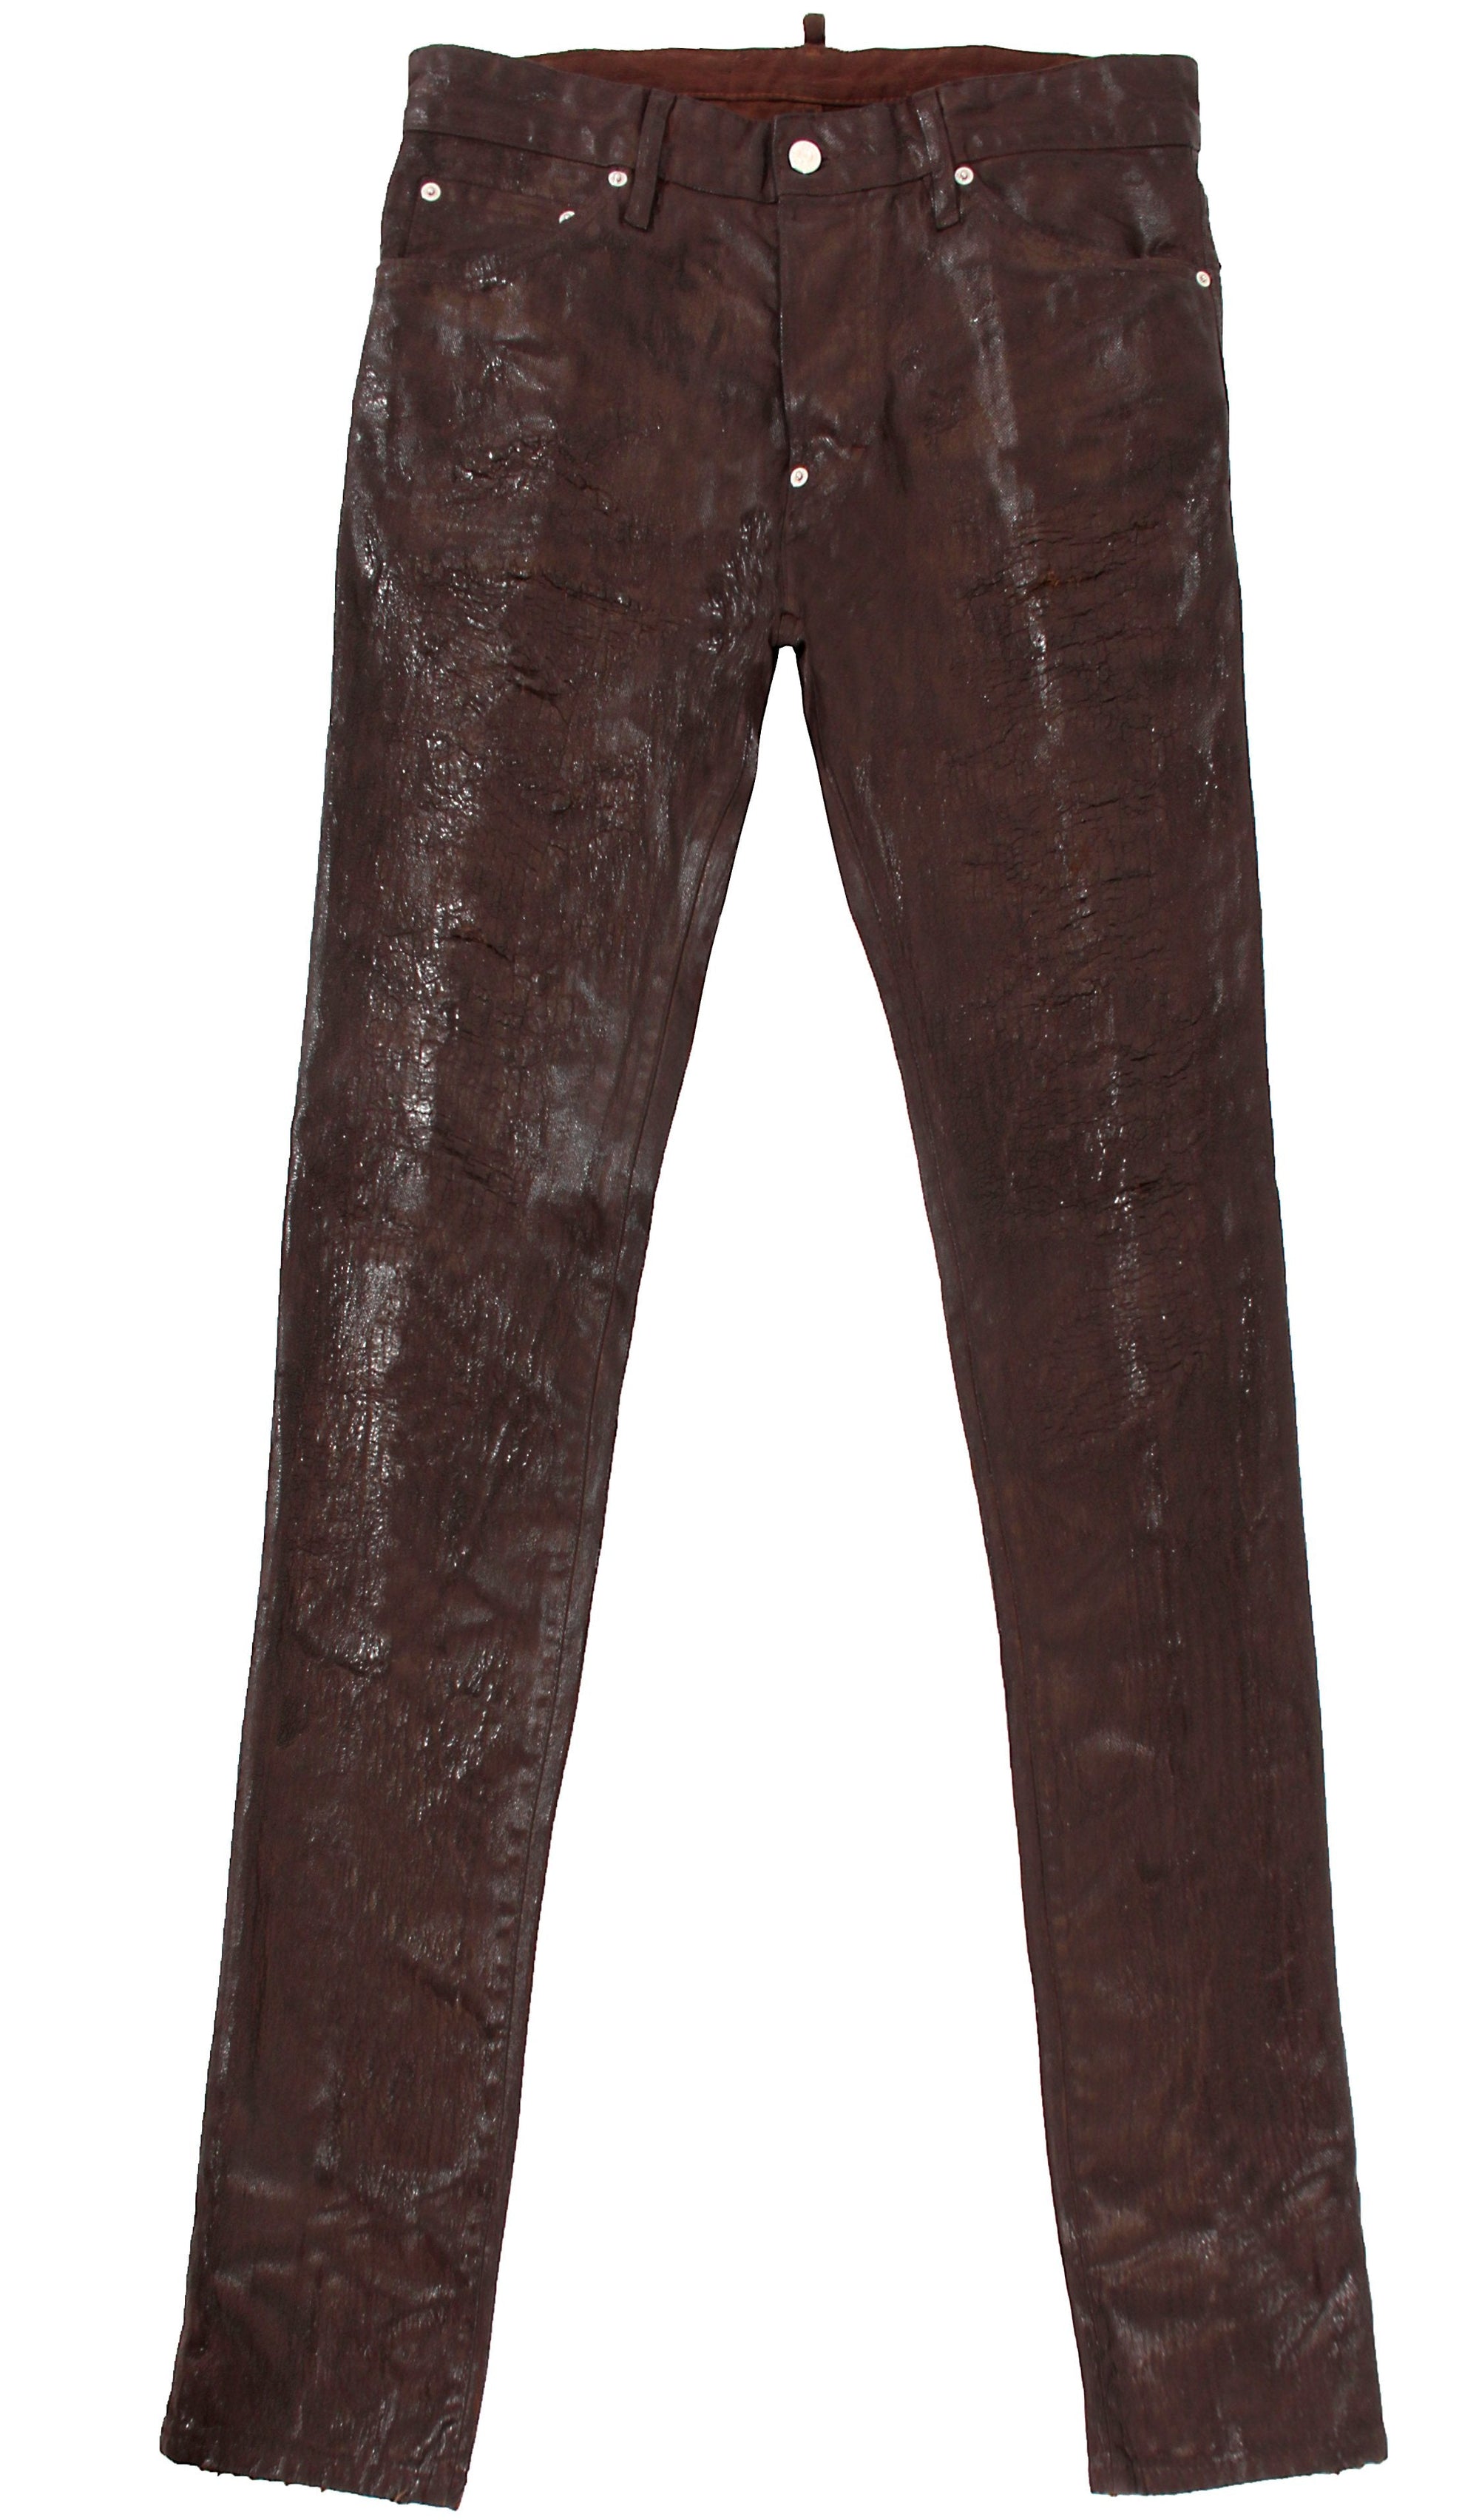 Leather 5 Pocket Pants - Brown